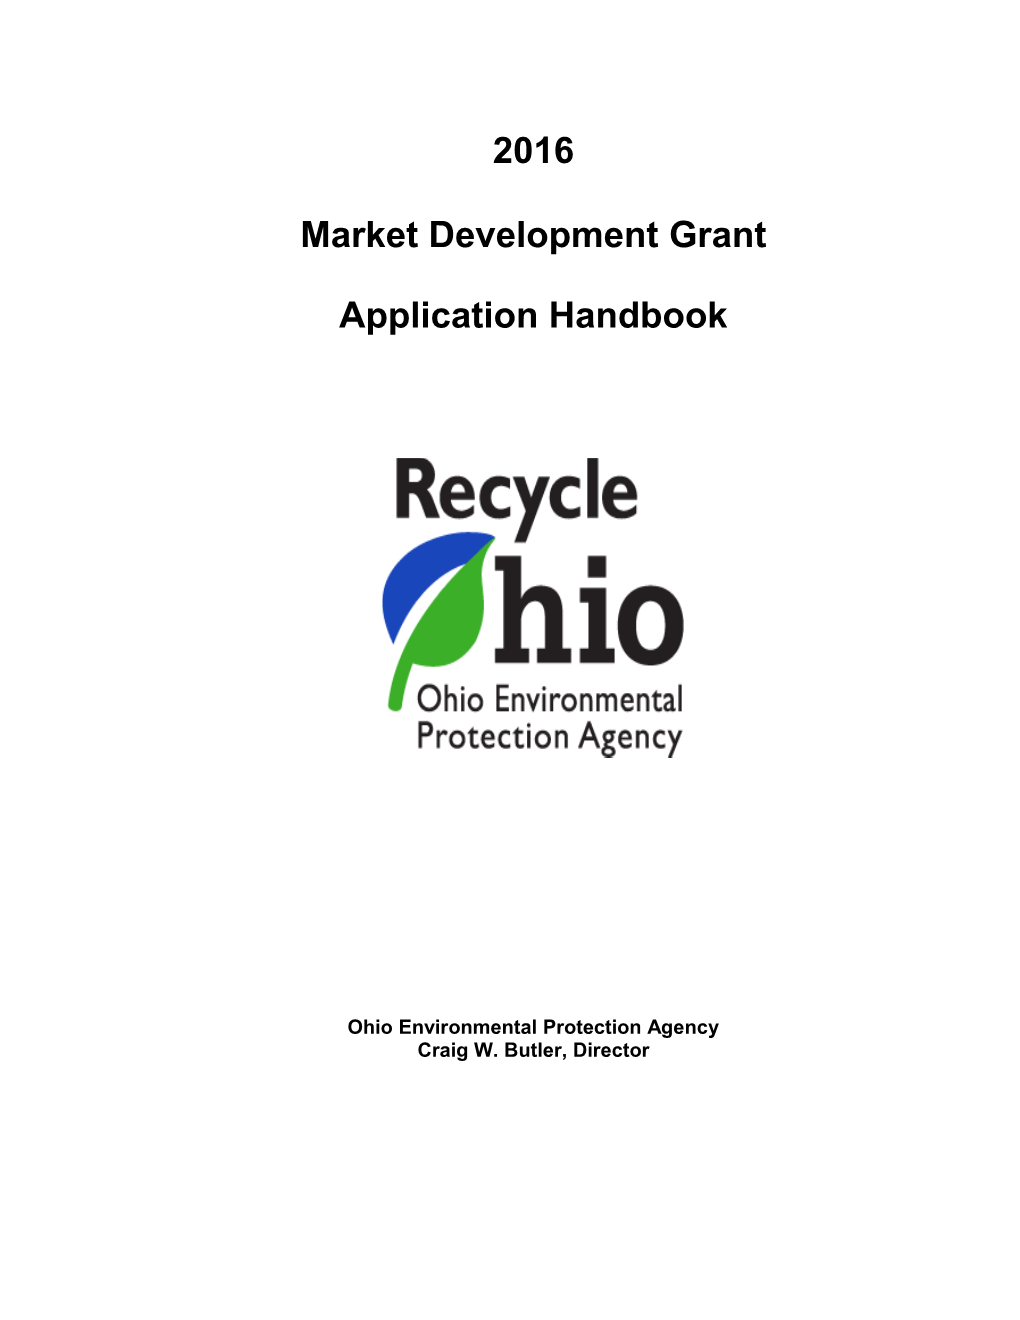 2012 Market Development Grant Application